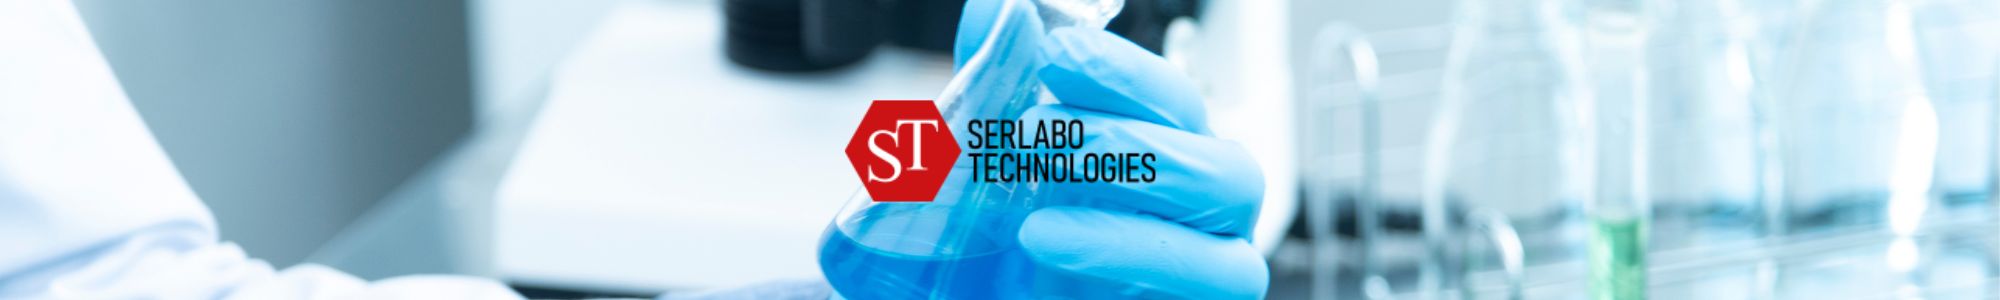 Serlabo Technologies 